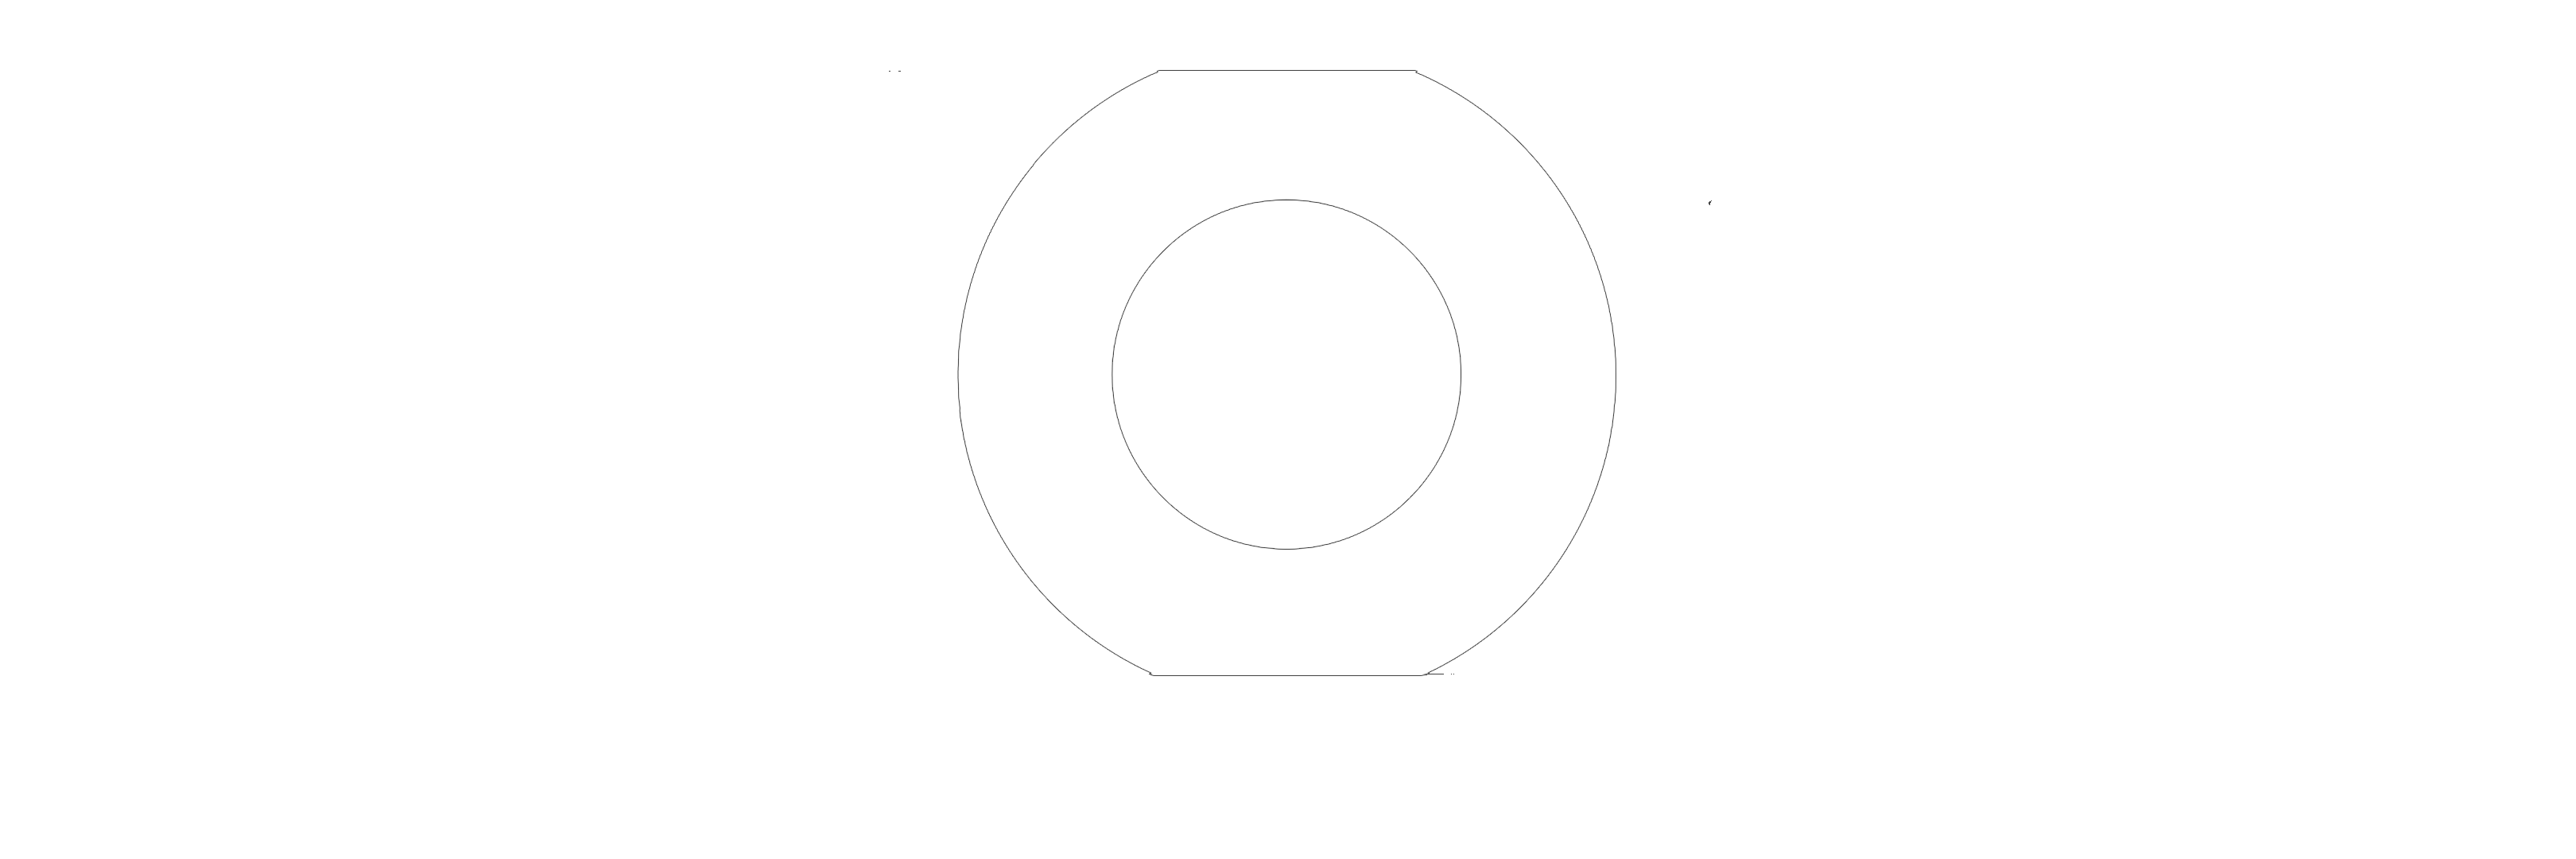 POYi Logo